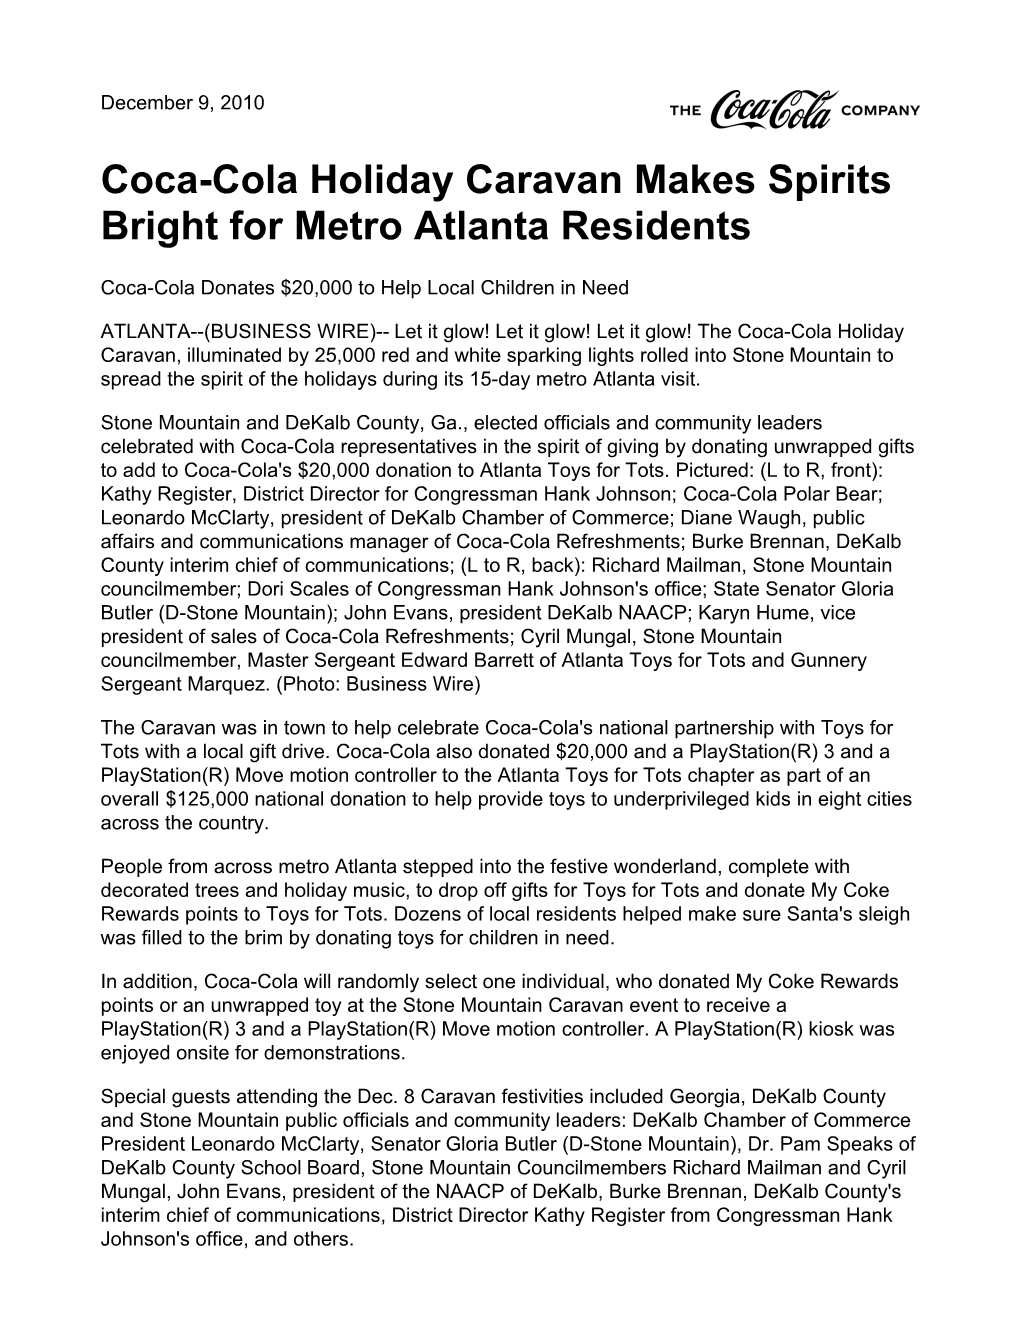 Coca-Cola Holiday Caravan Makes Spirits Bright for Metro Atlanta Residents